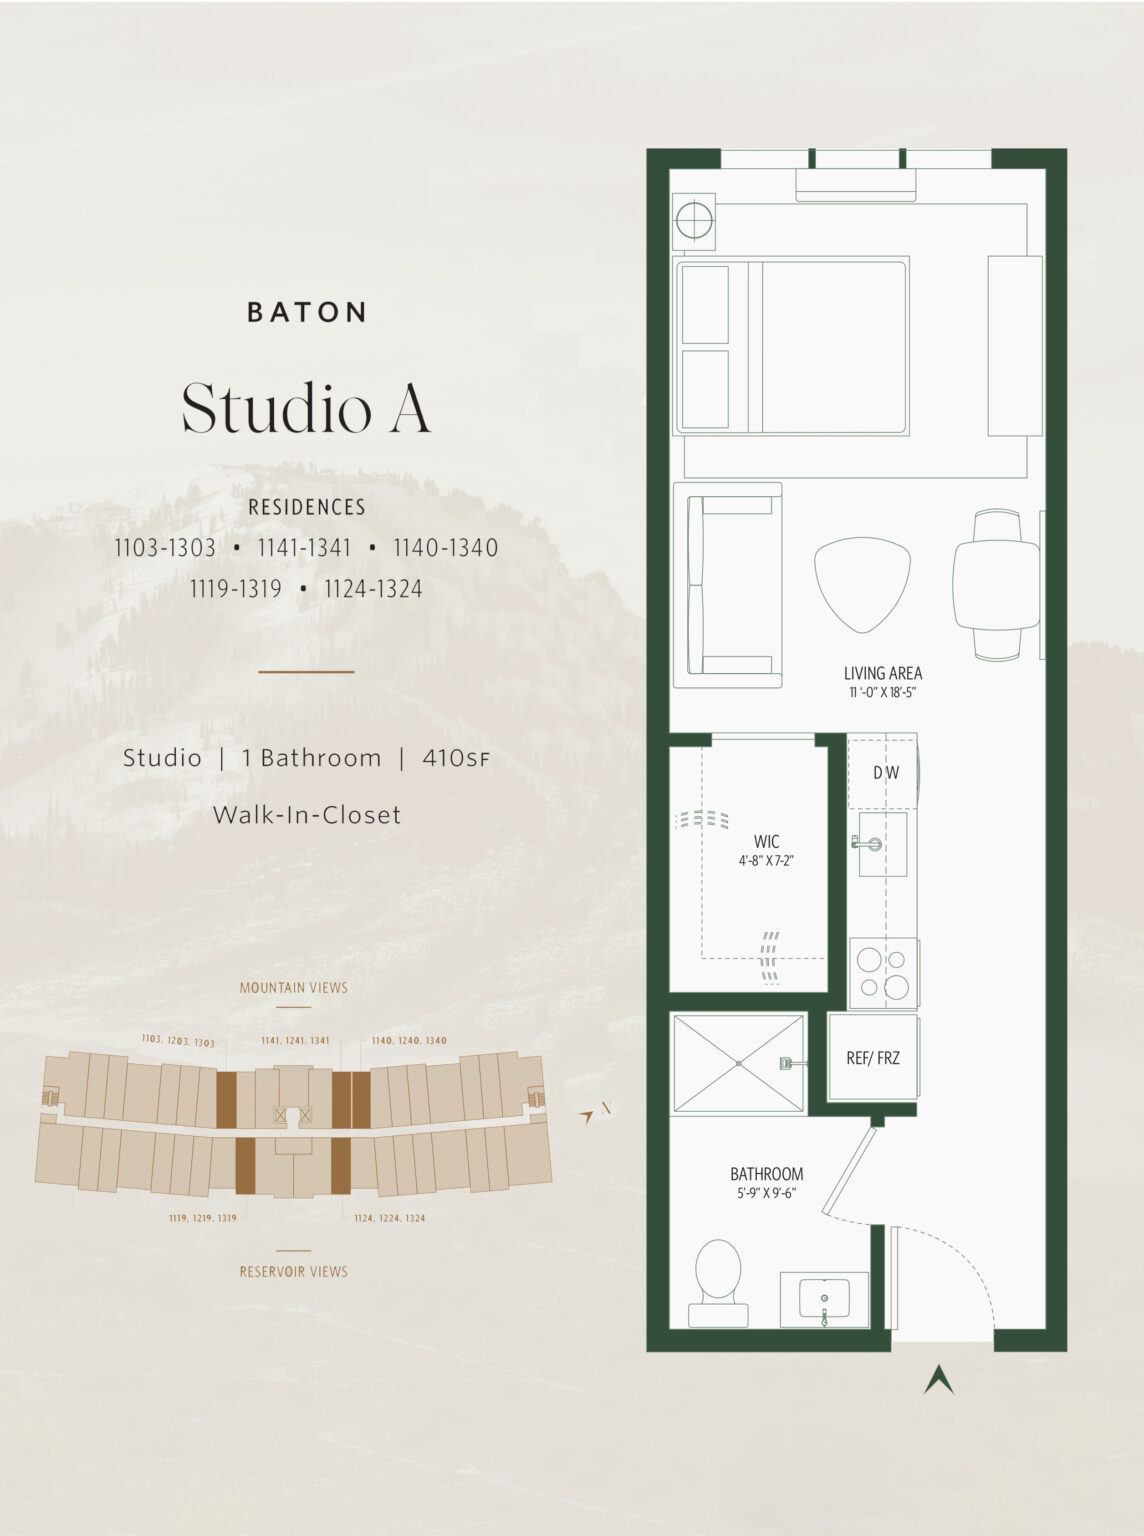 Baton - Studio A